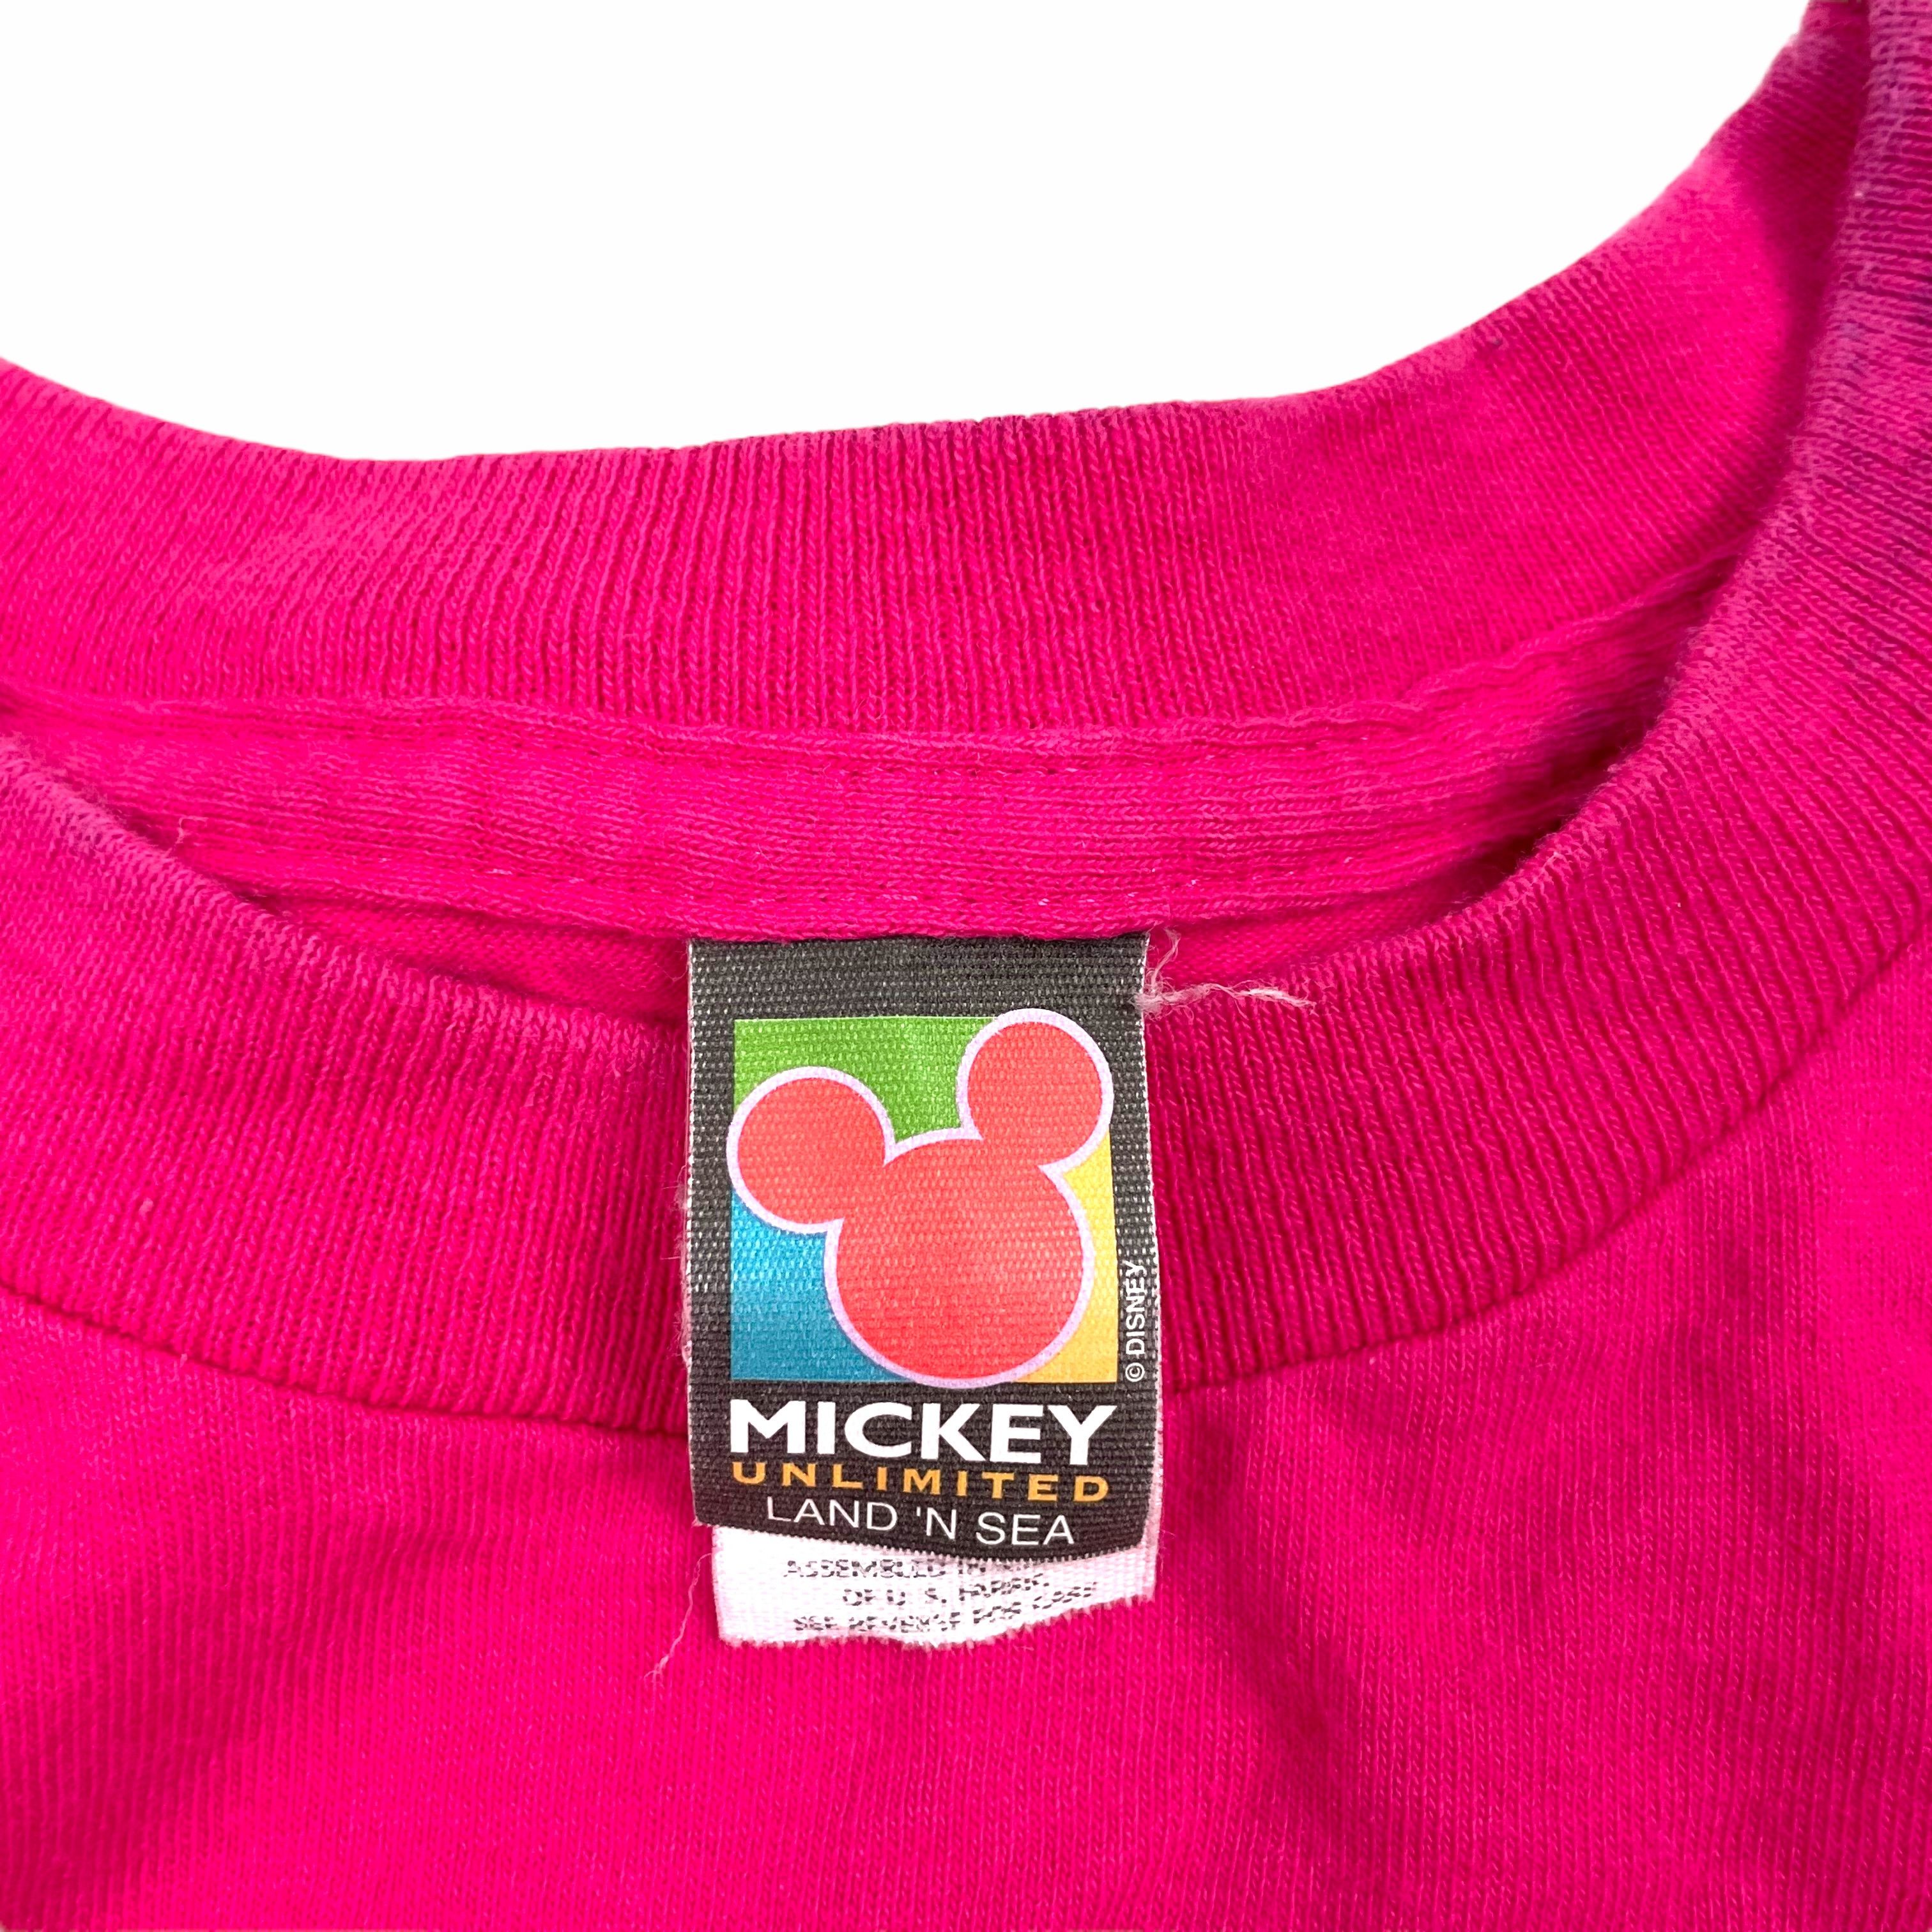 Vintage Vintage 90s Disney Mickey Mouse Key Hole Pink Shirt Size XL Size US XL / EU 56 / 4 - 4 Preview